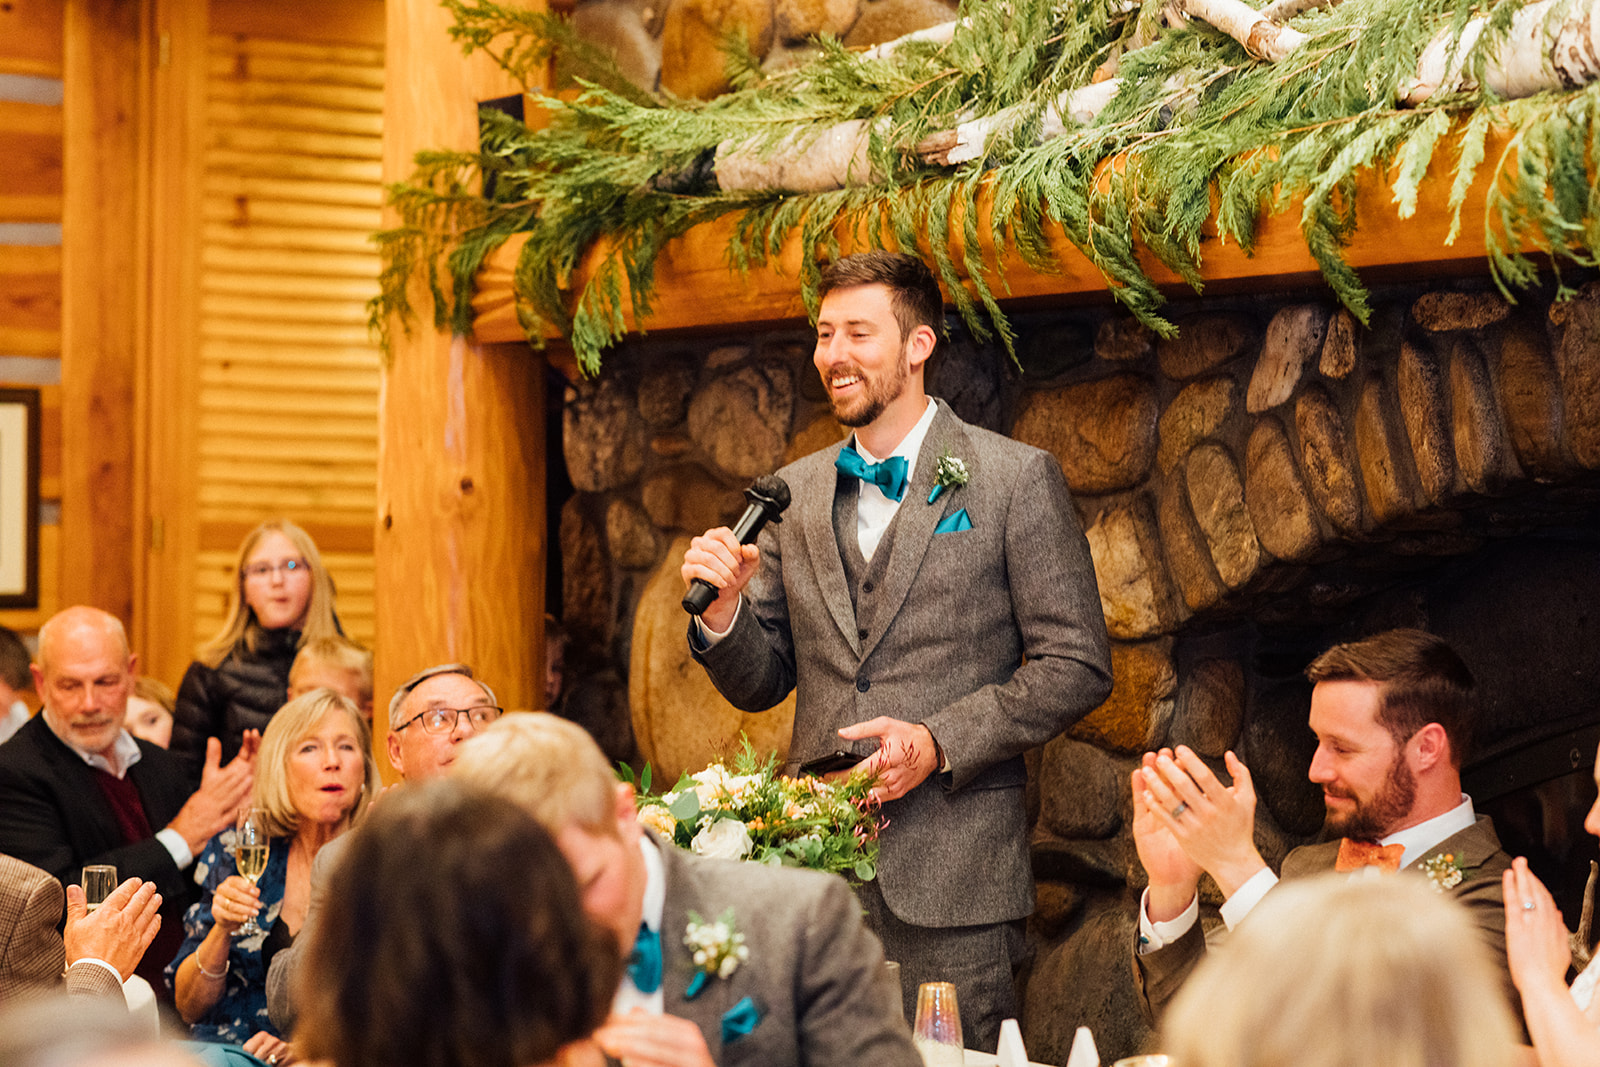 Mountain Springs Lodge Winter wedding